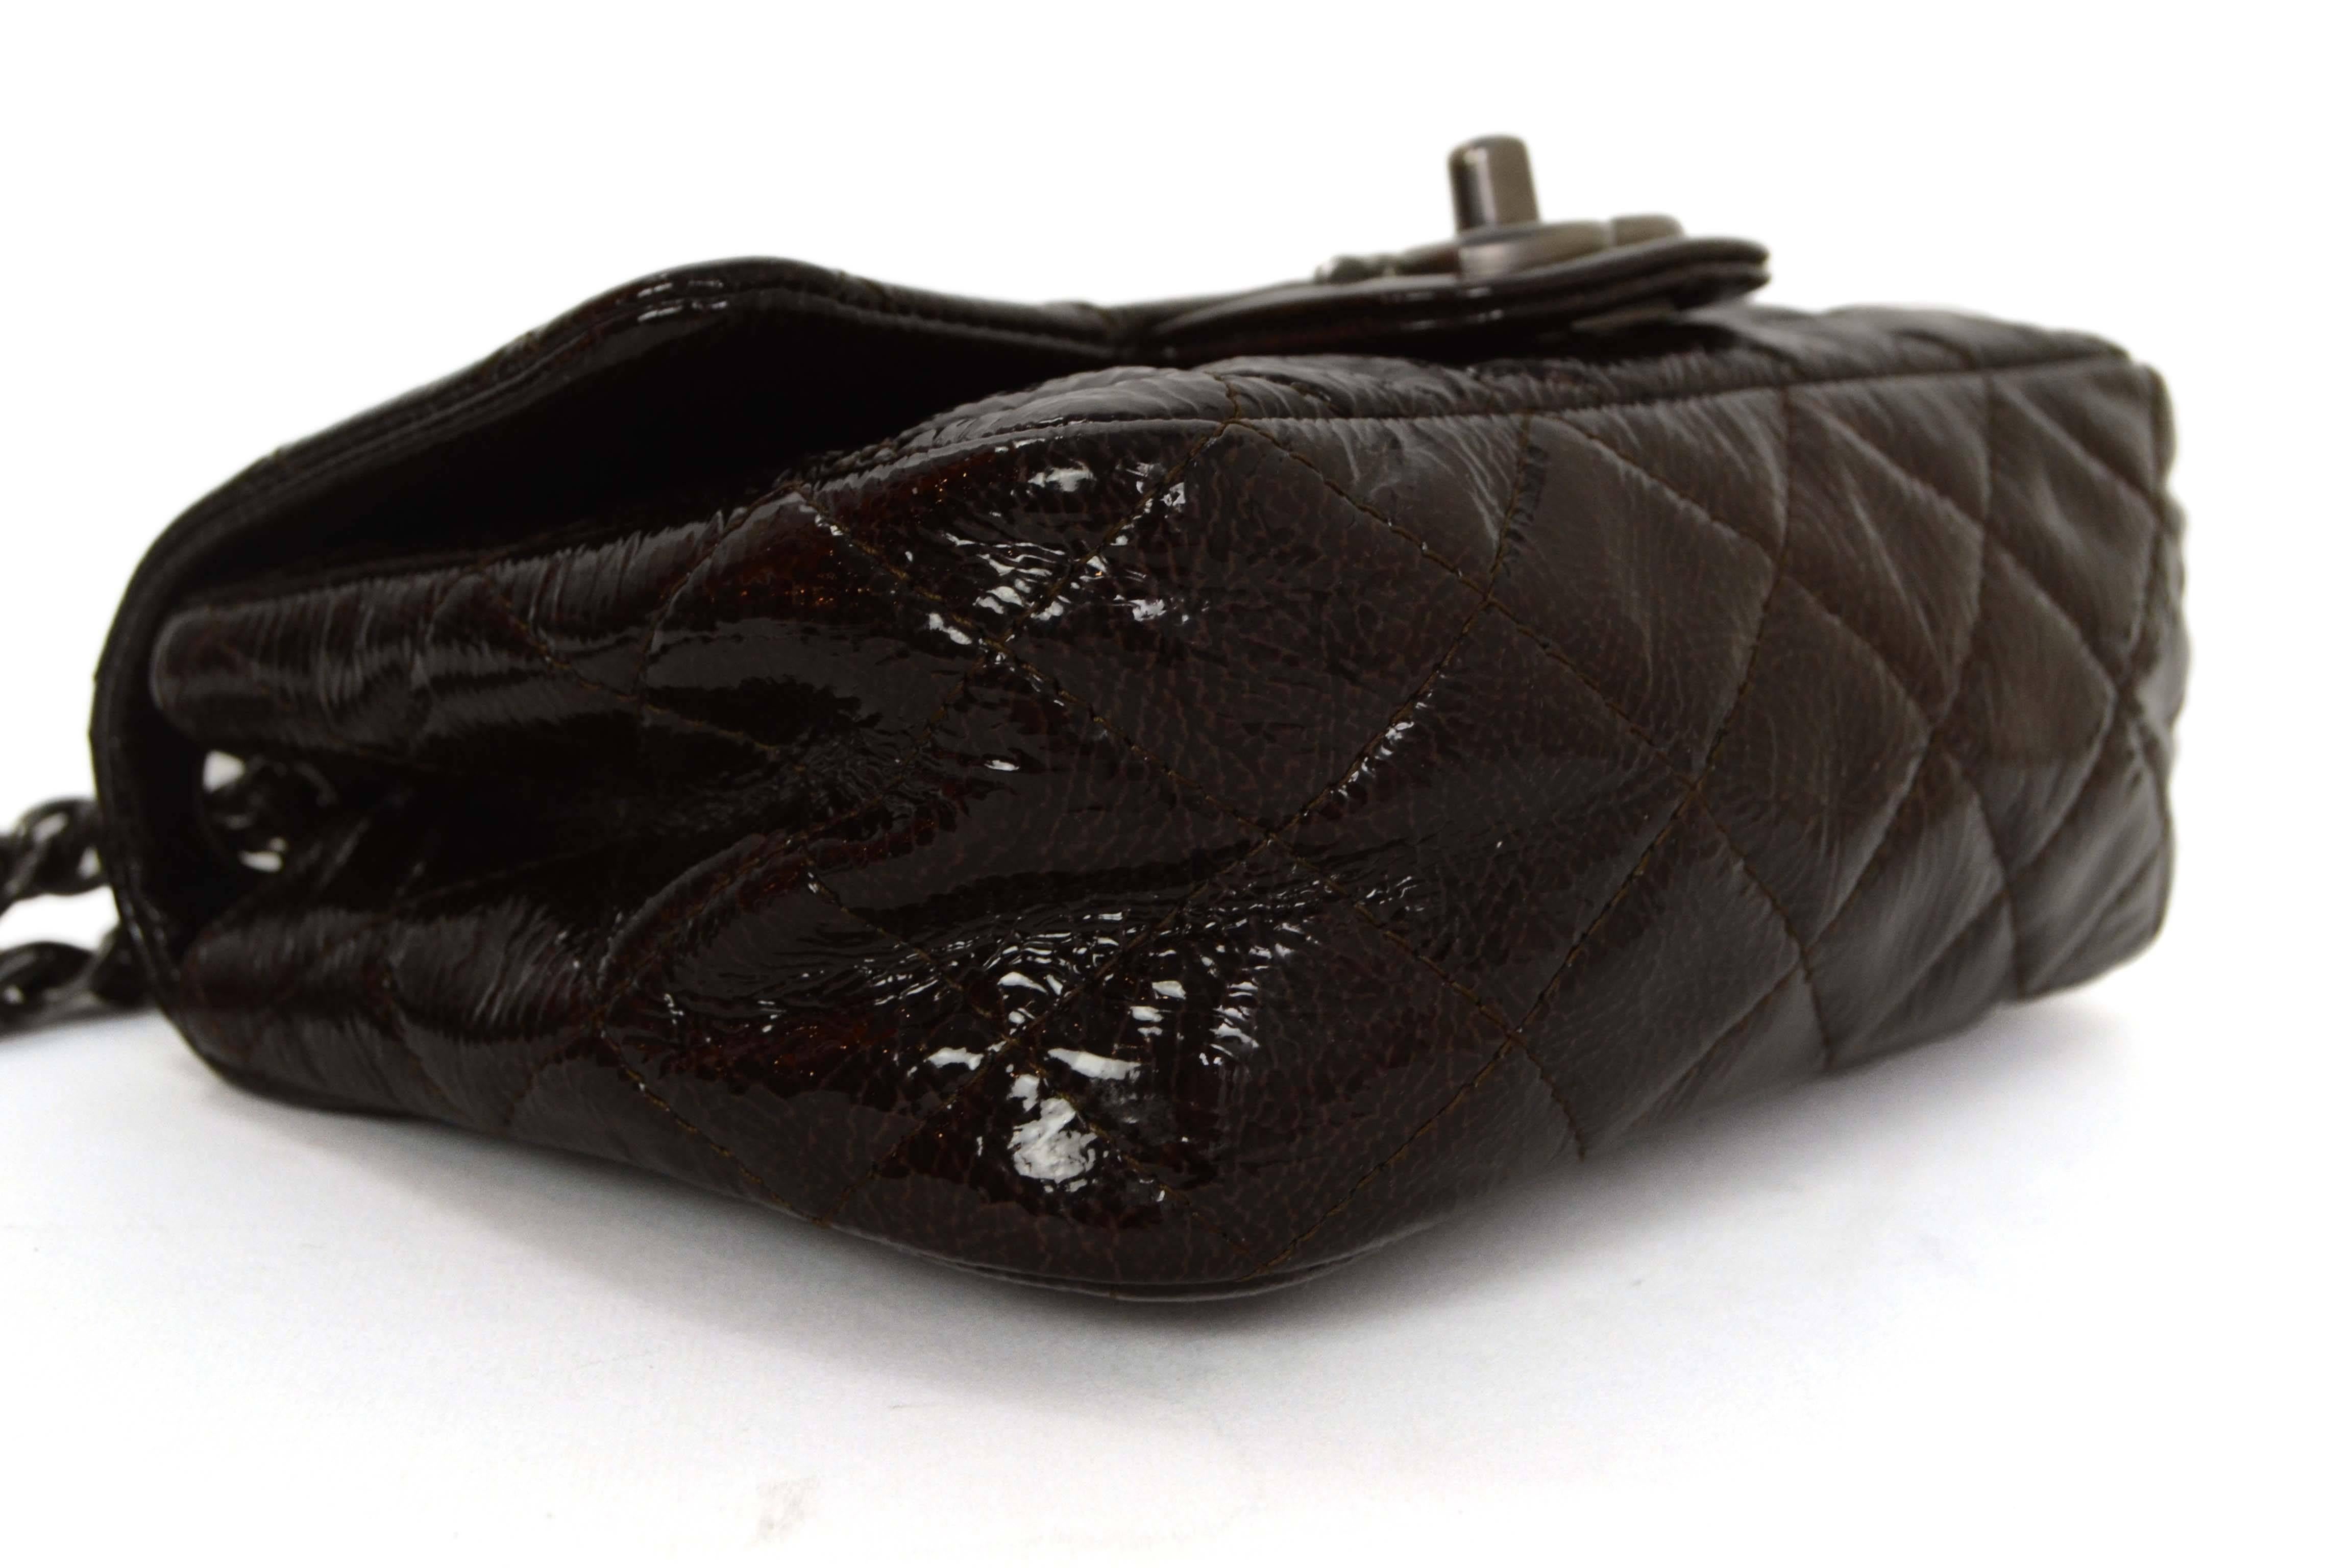 chanel mini flap bag patent leather